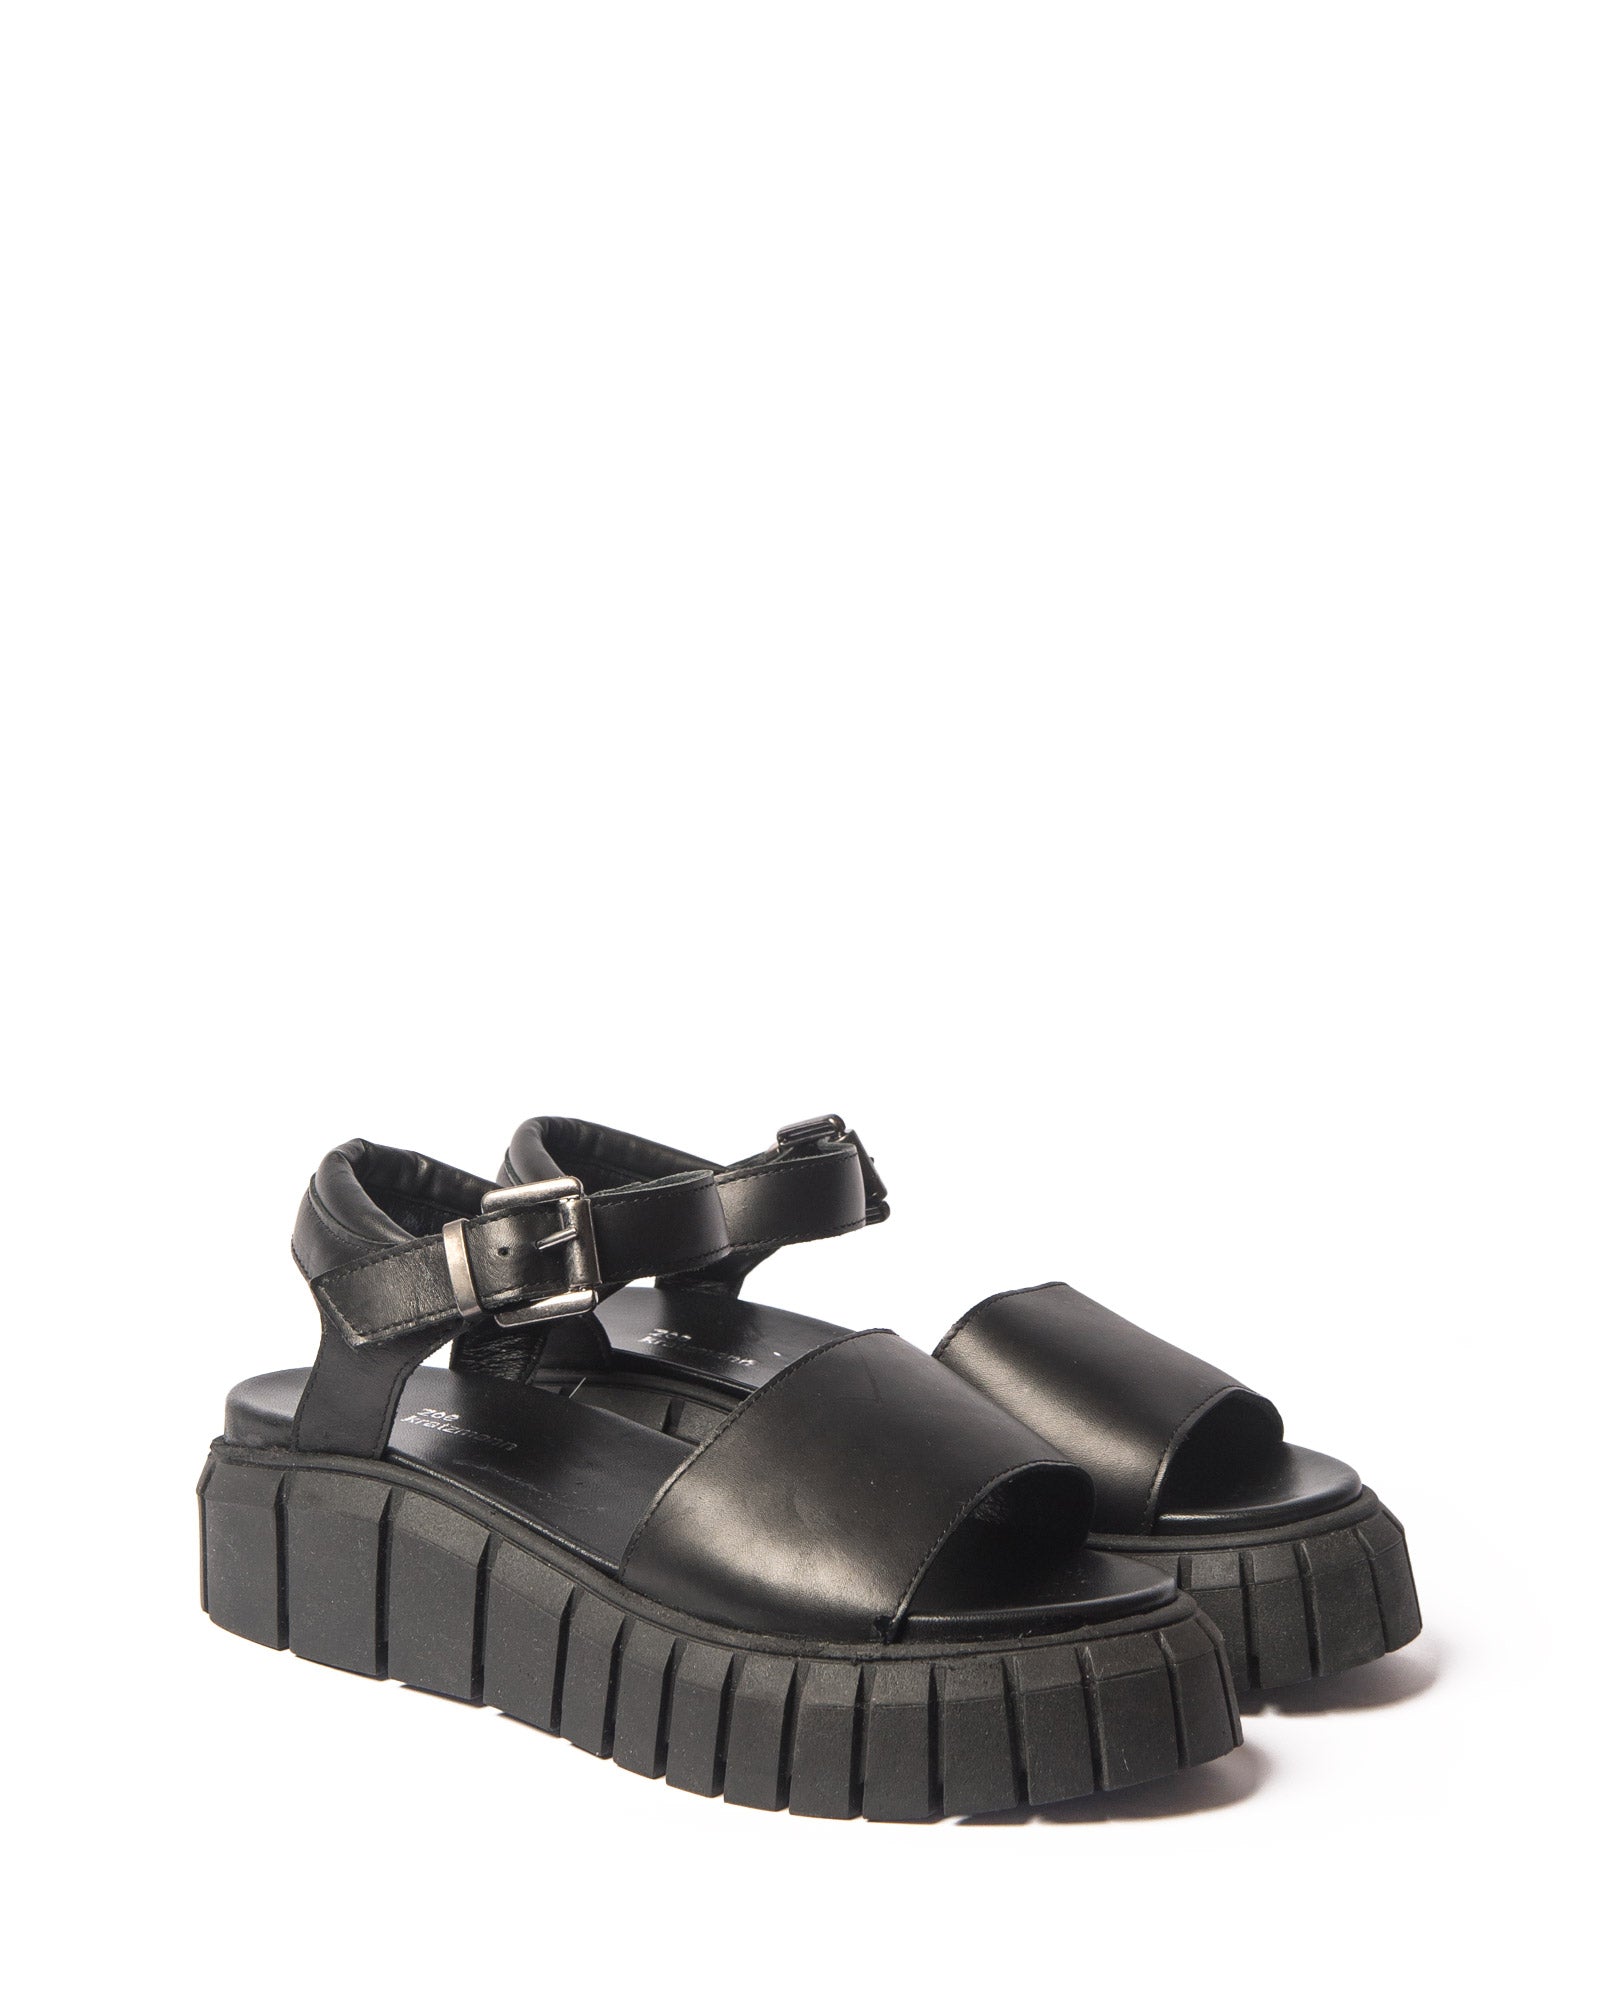 shortlist sandal - black